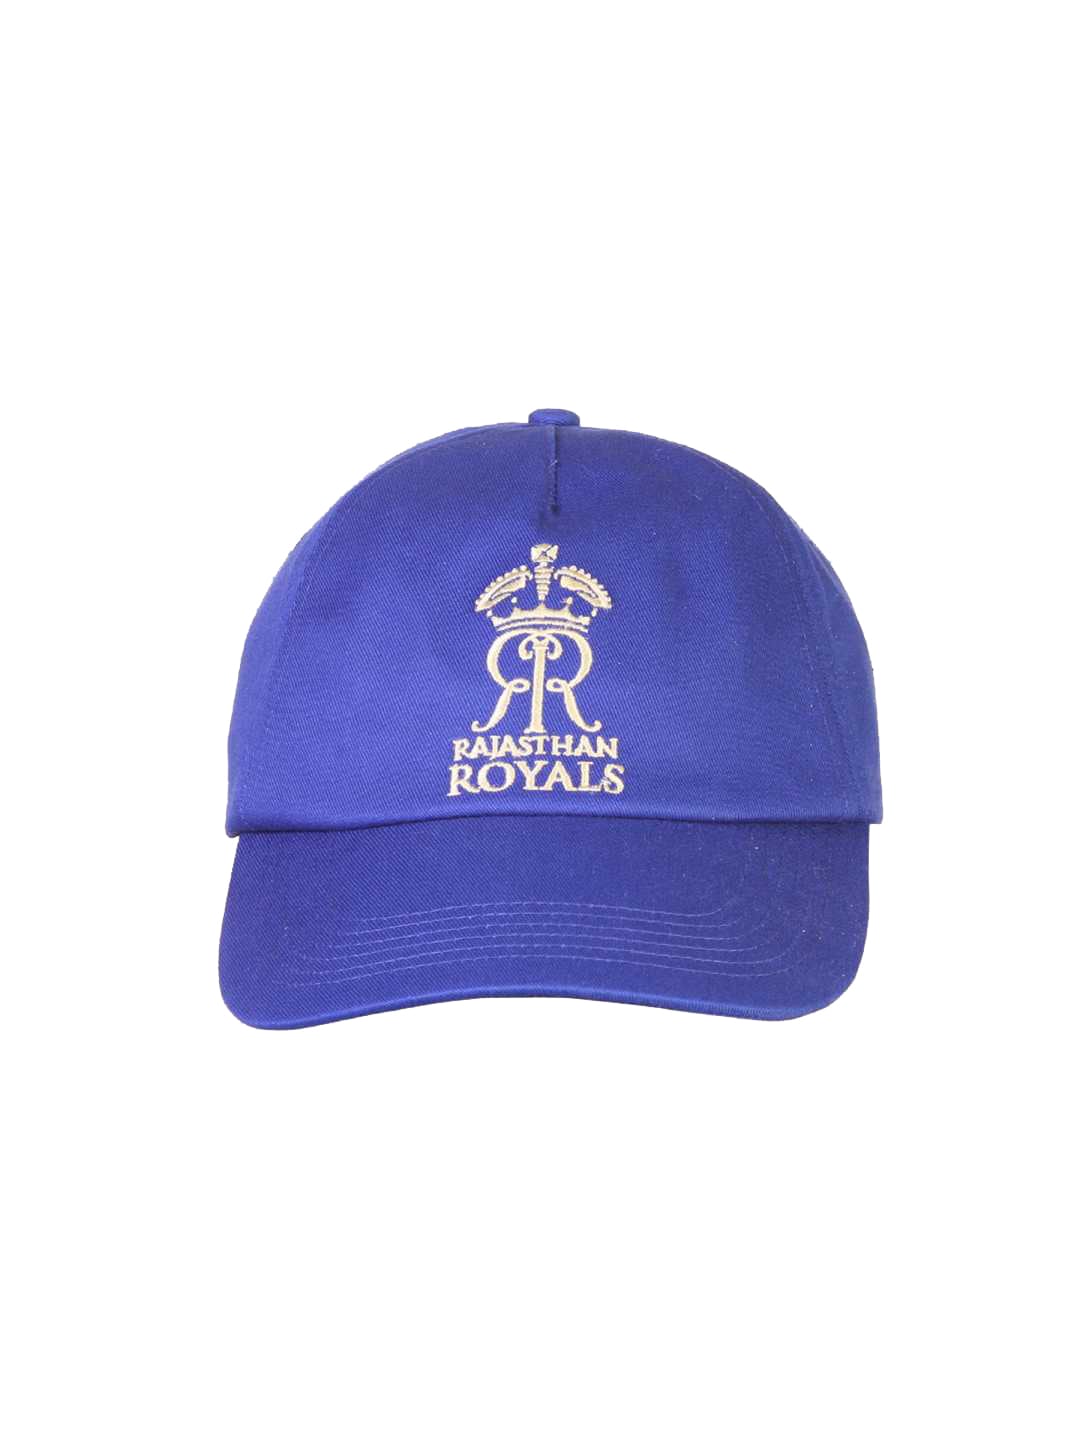 Puma Rajasthan Royals Blue Fanwear Cap